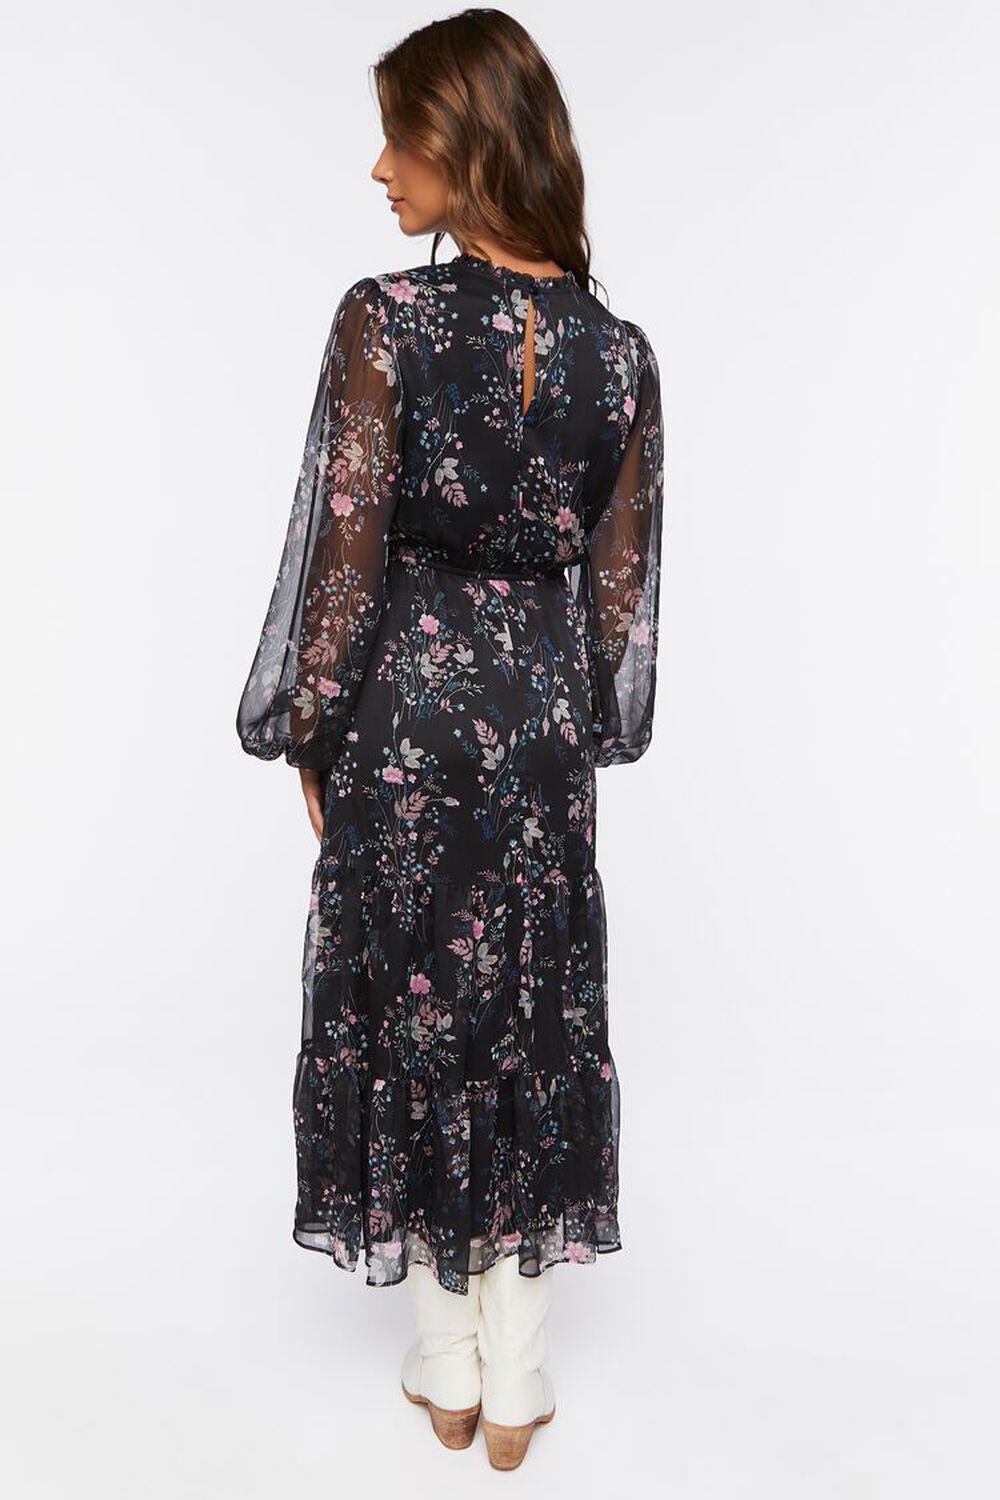 BLACK/MULTI Chiffon Floral Print Midi Dress, image 3